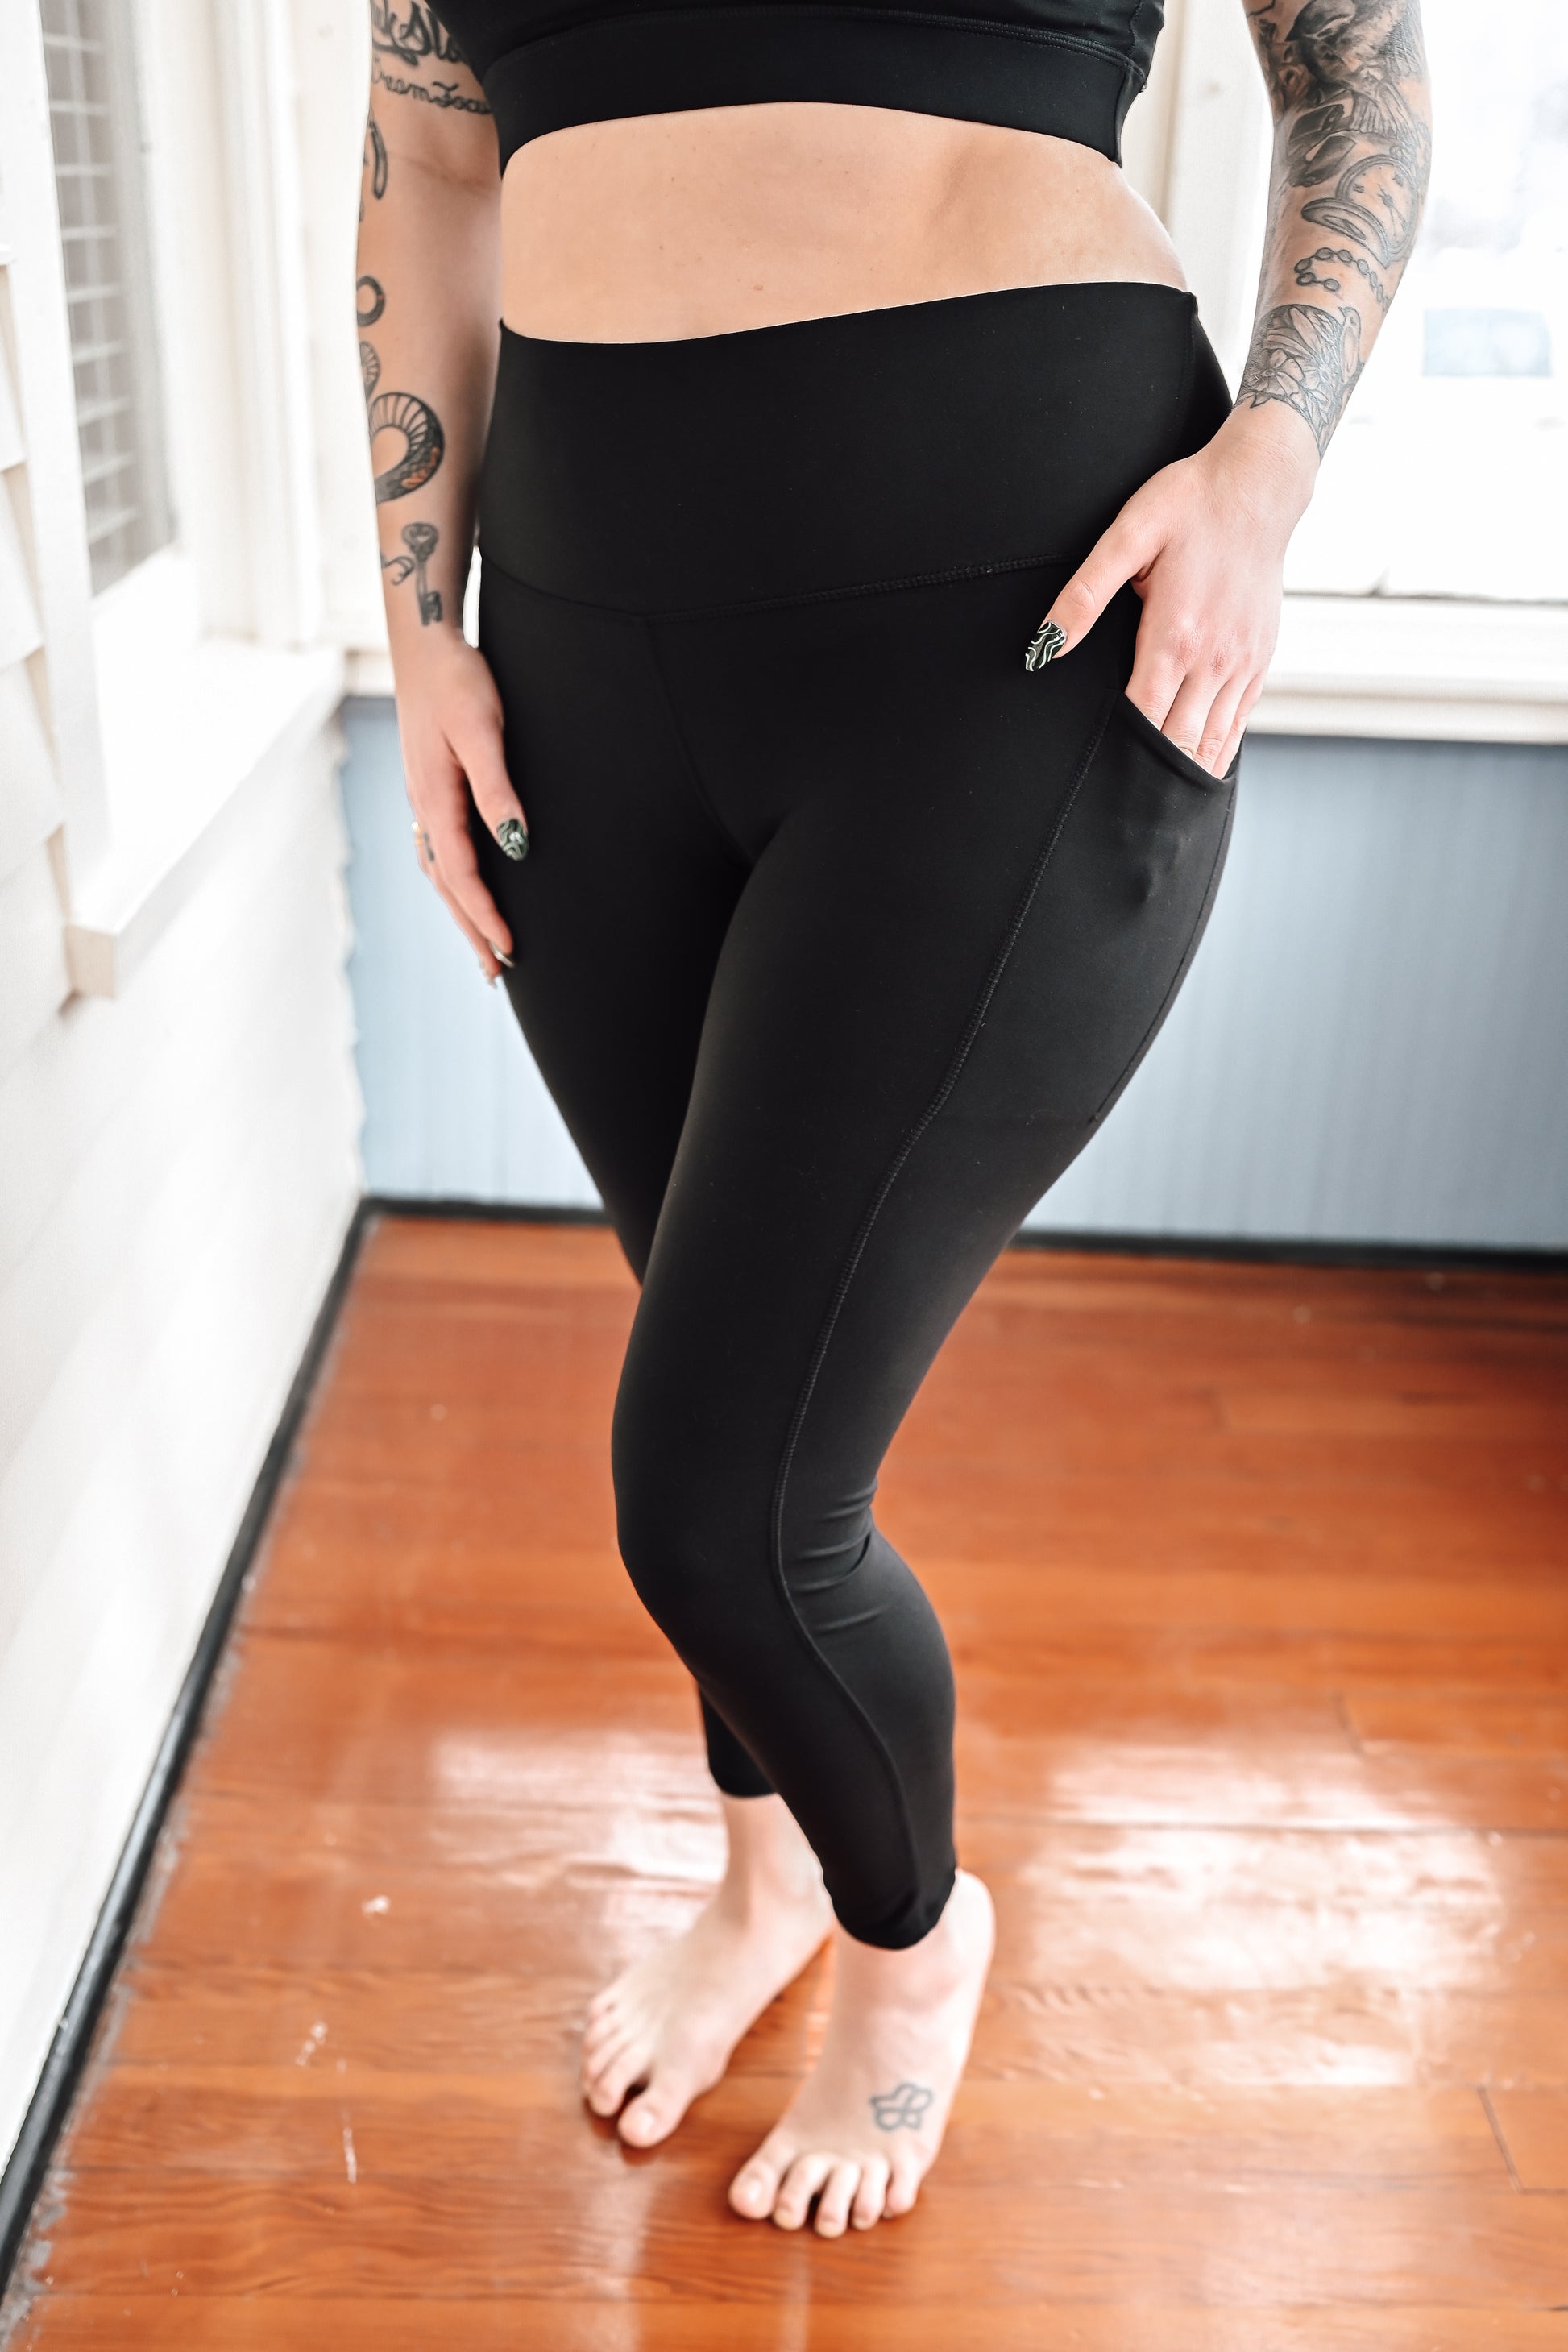 Black Buttery Soft Leggings - Plus Size XL-2X, Online Store